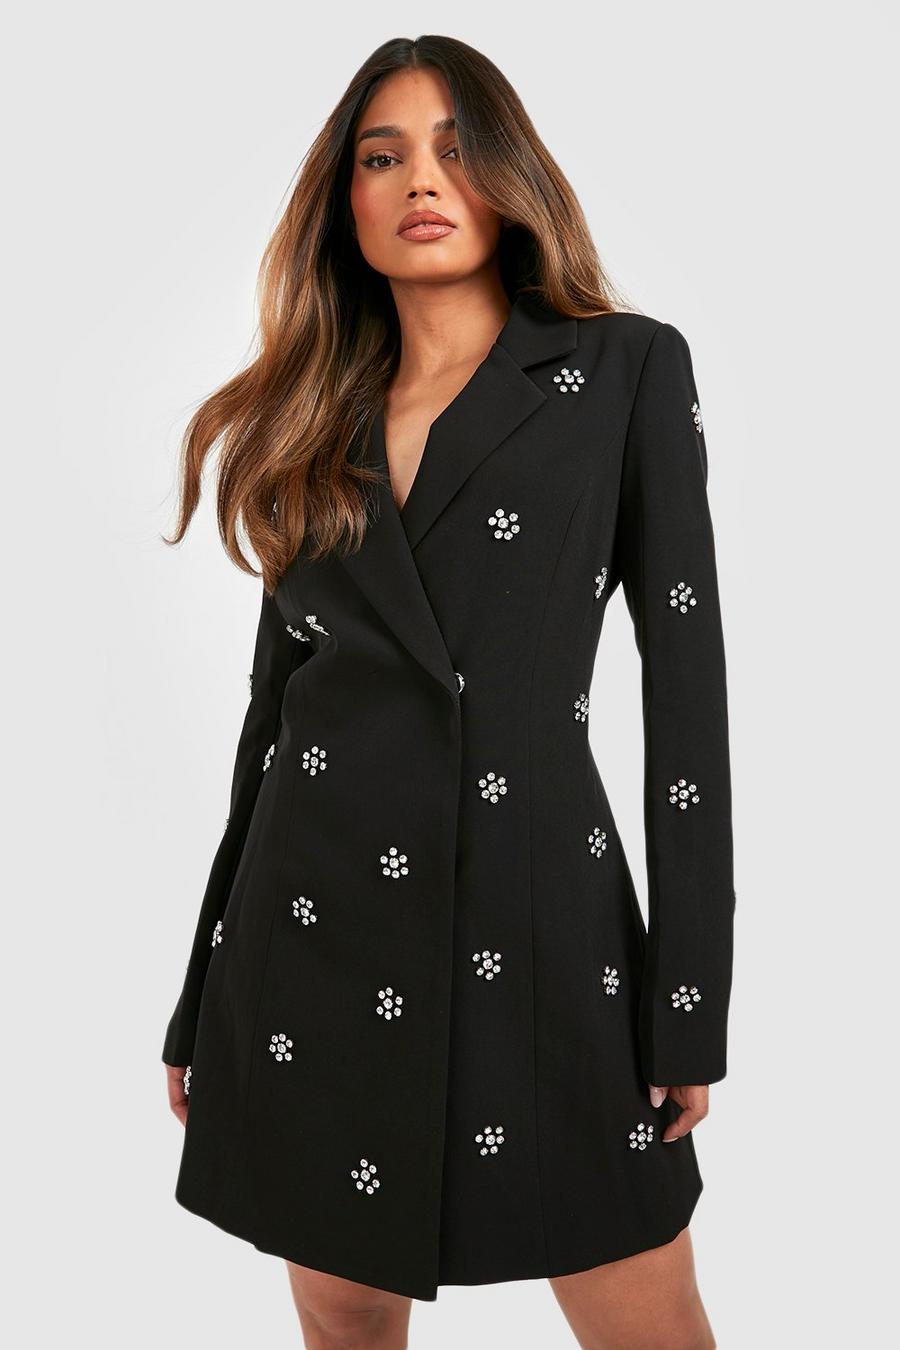 Black Daisy Crystal Embellished Tailored Blazer Dress for image number 1